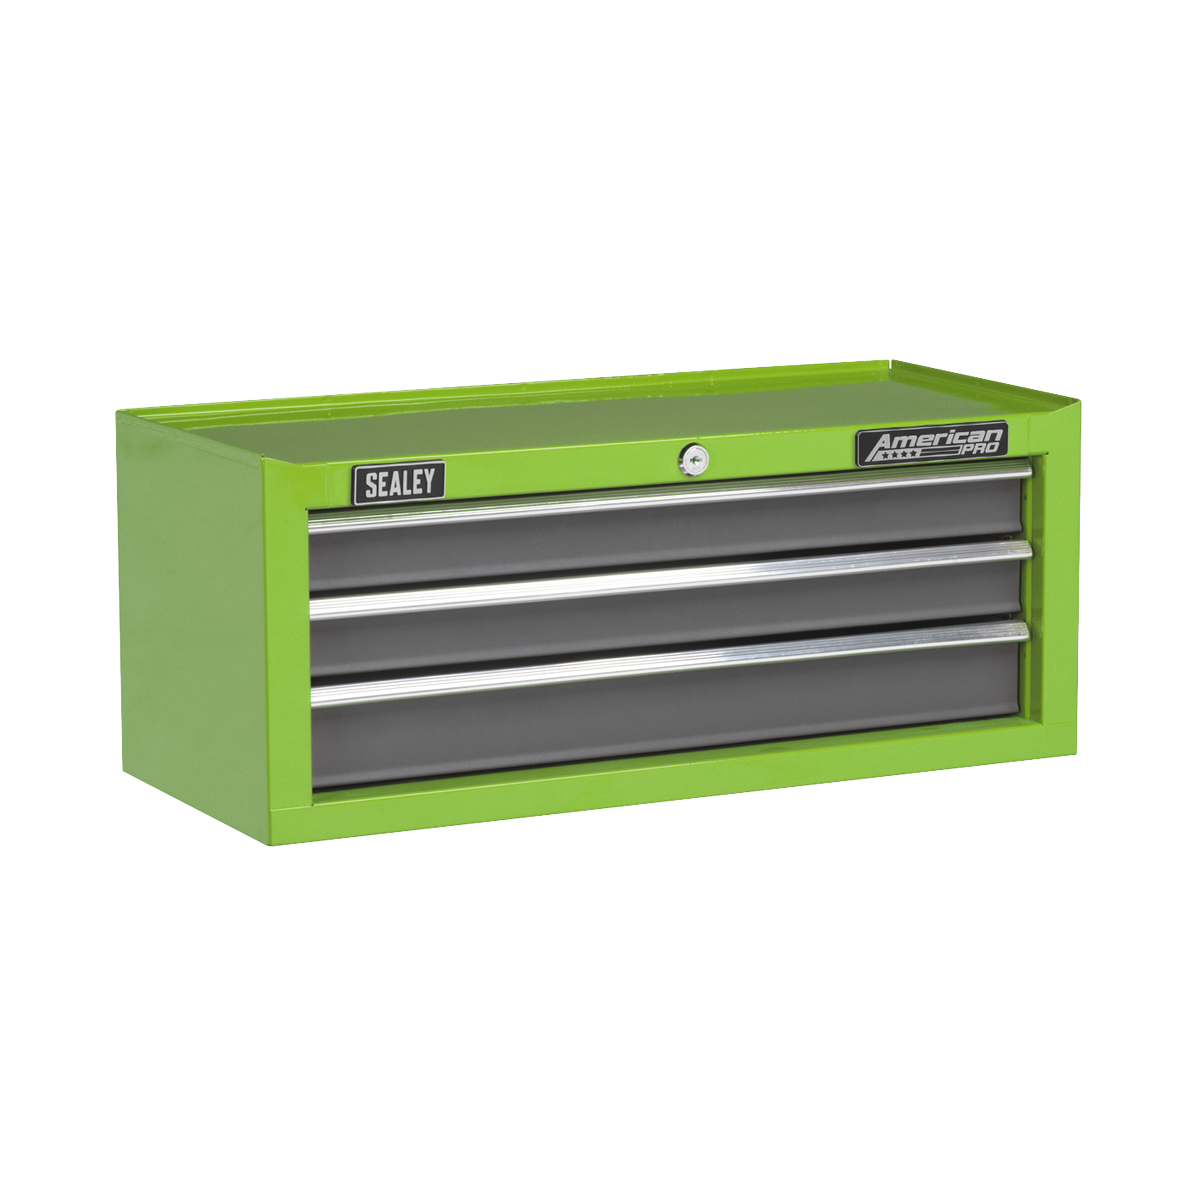 Sealey 3 Drawer Mid-Box with Ball-Bearing Slides - Green/Grey AP22309BBHV